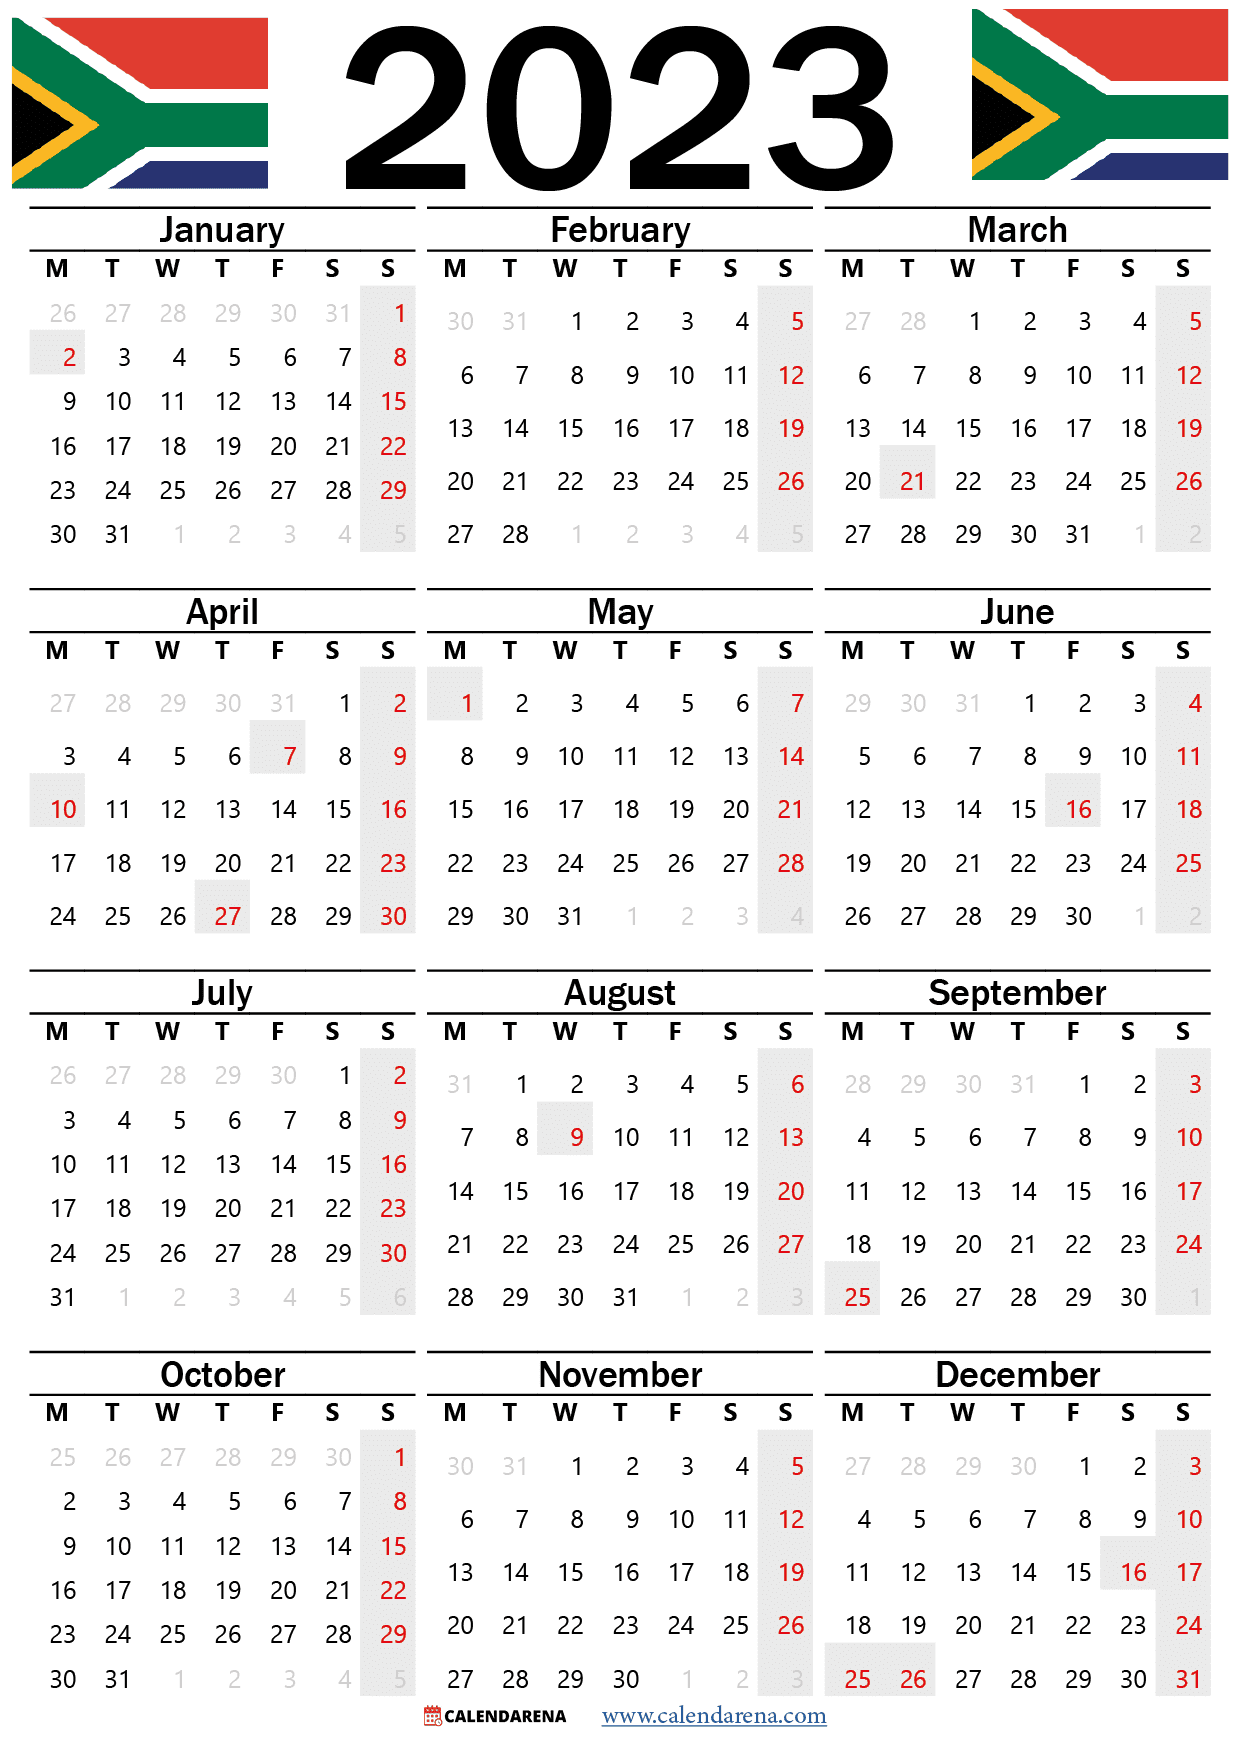 south-africa-public-holidays-2023-calendar-time-and-date-calendar